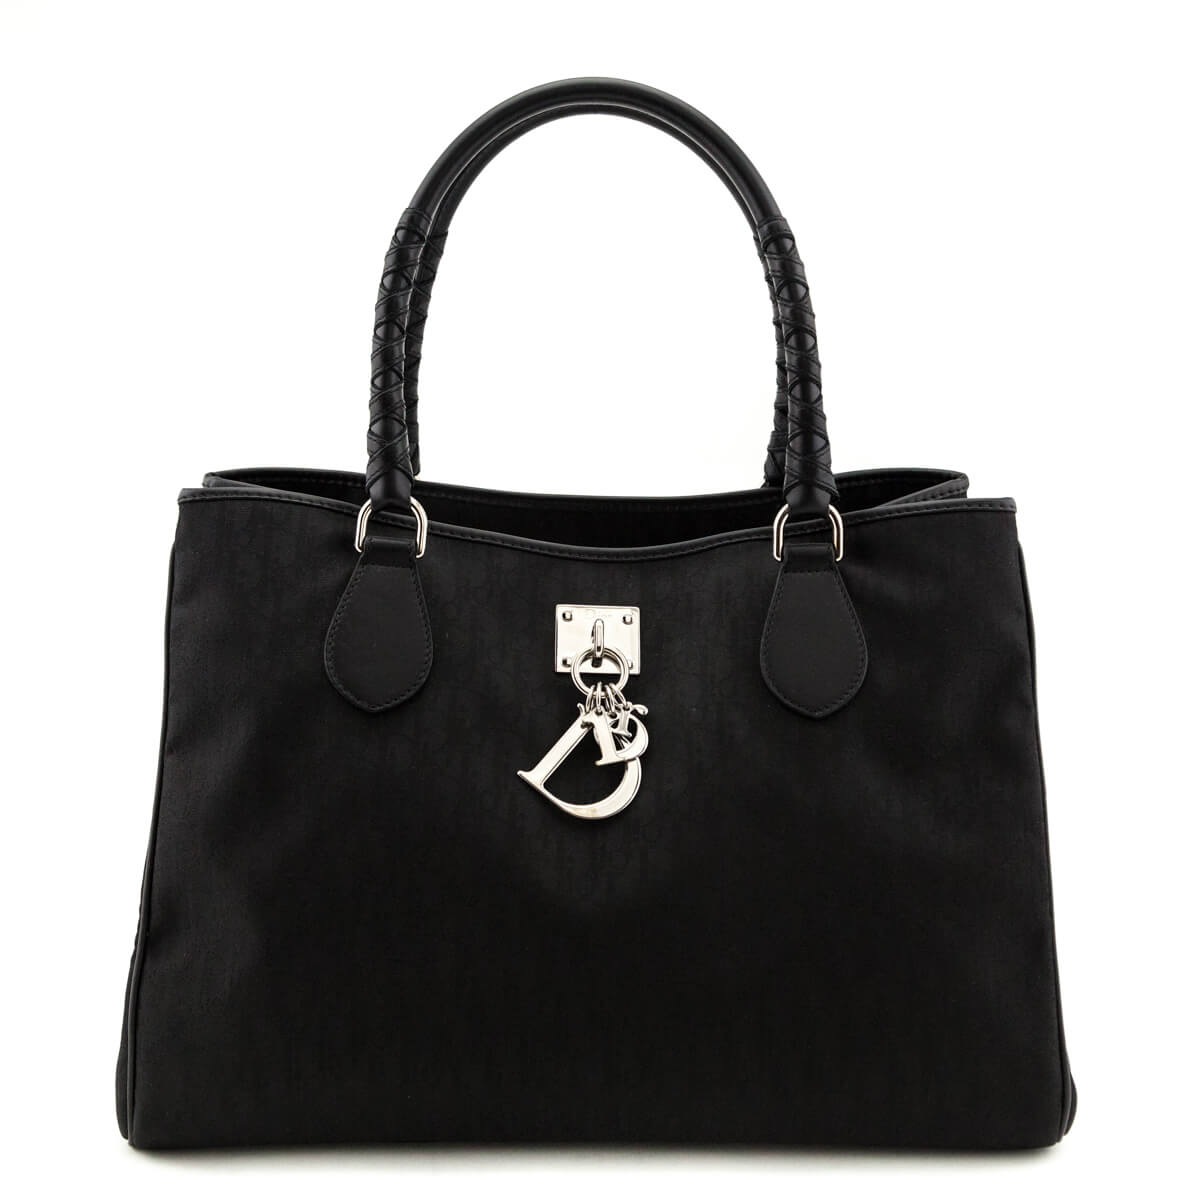 Dior Black Jacquard Diorissimo Lovely Tote Bag - Preloved Dior Handbag